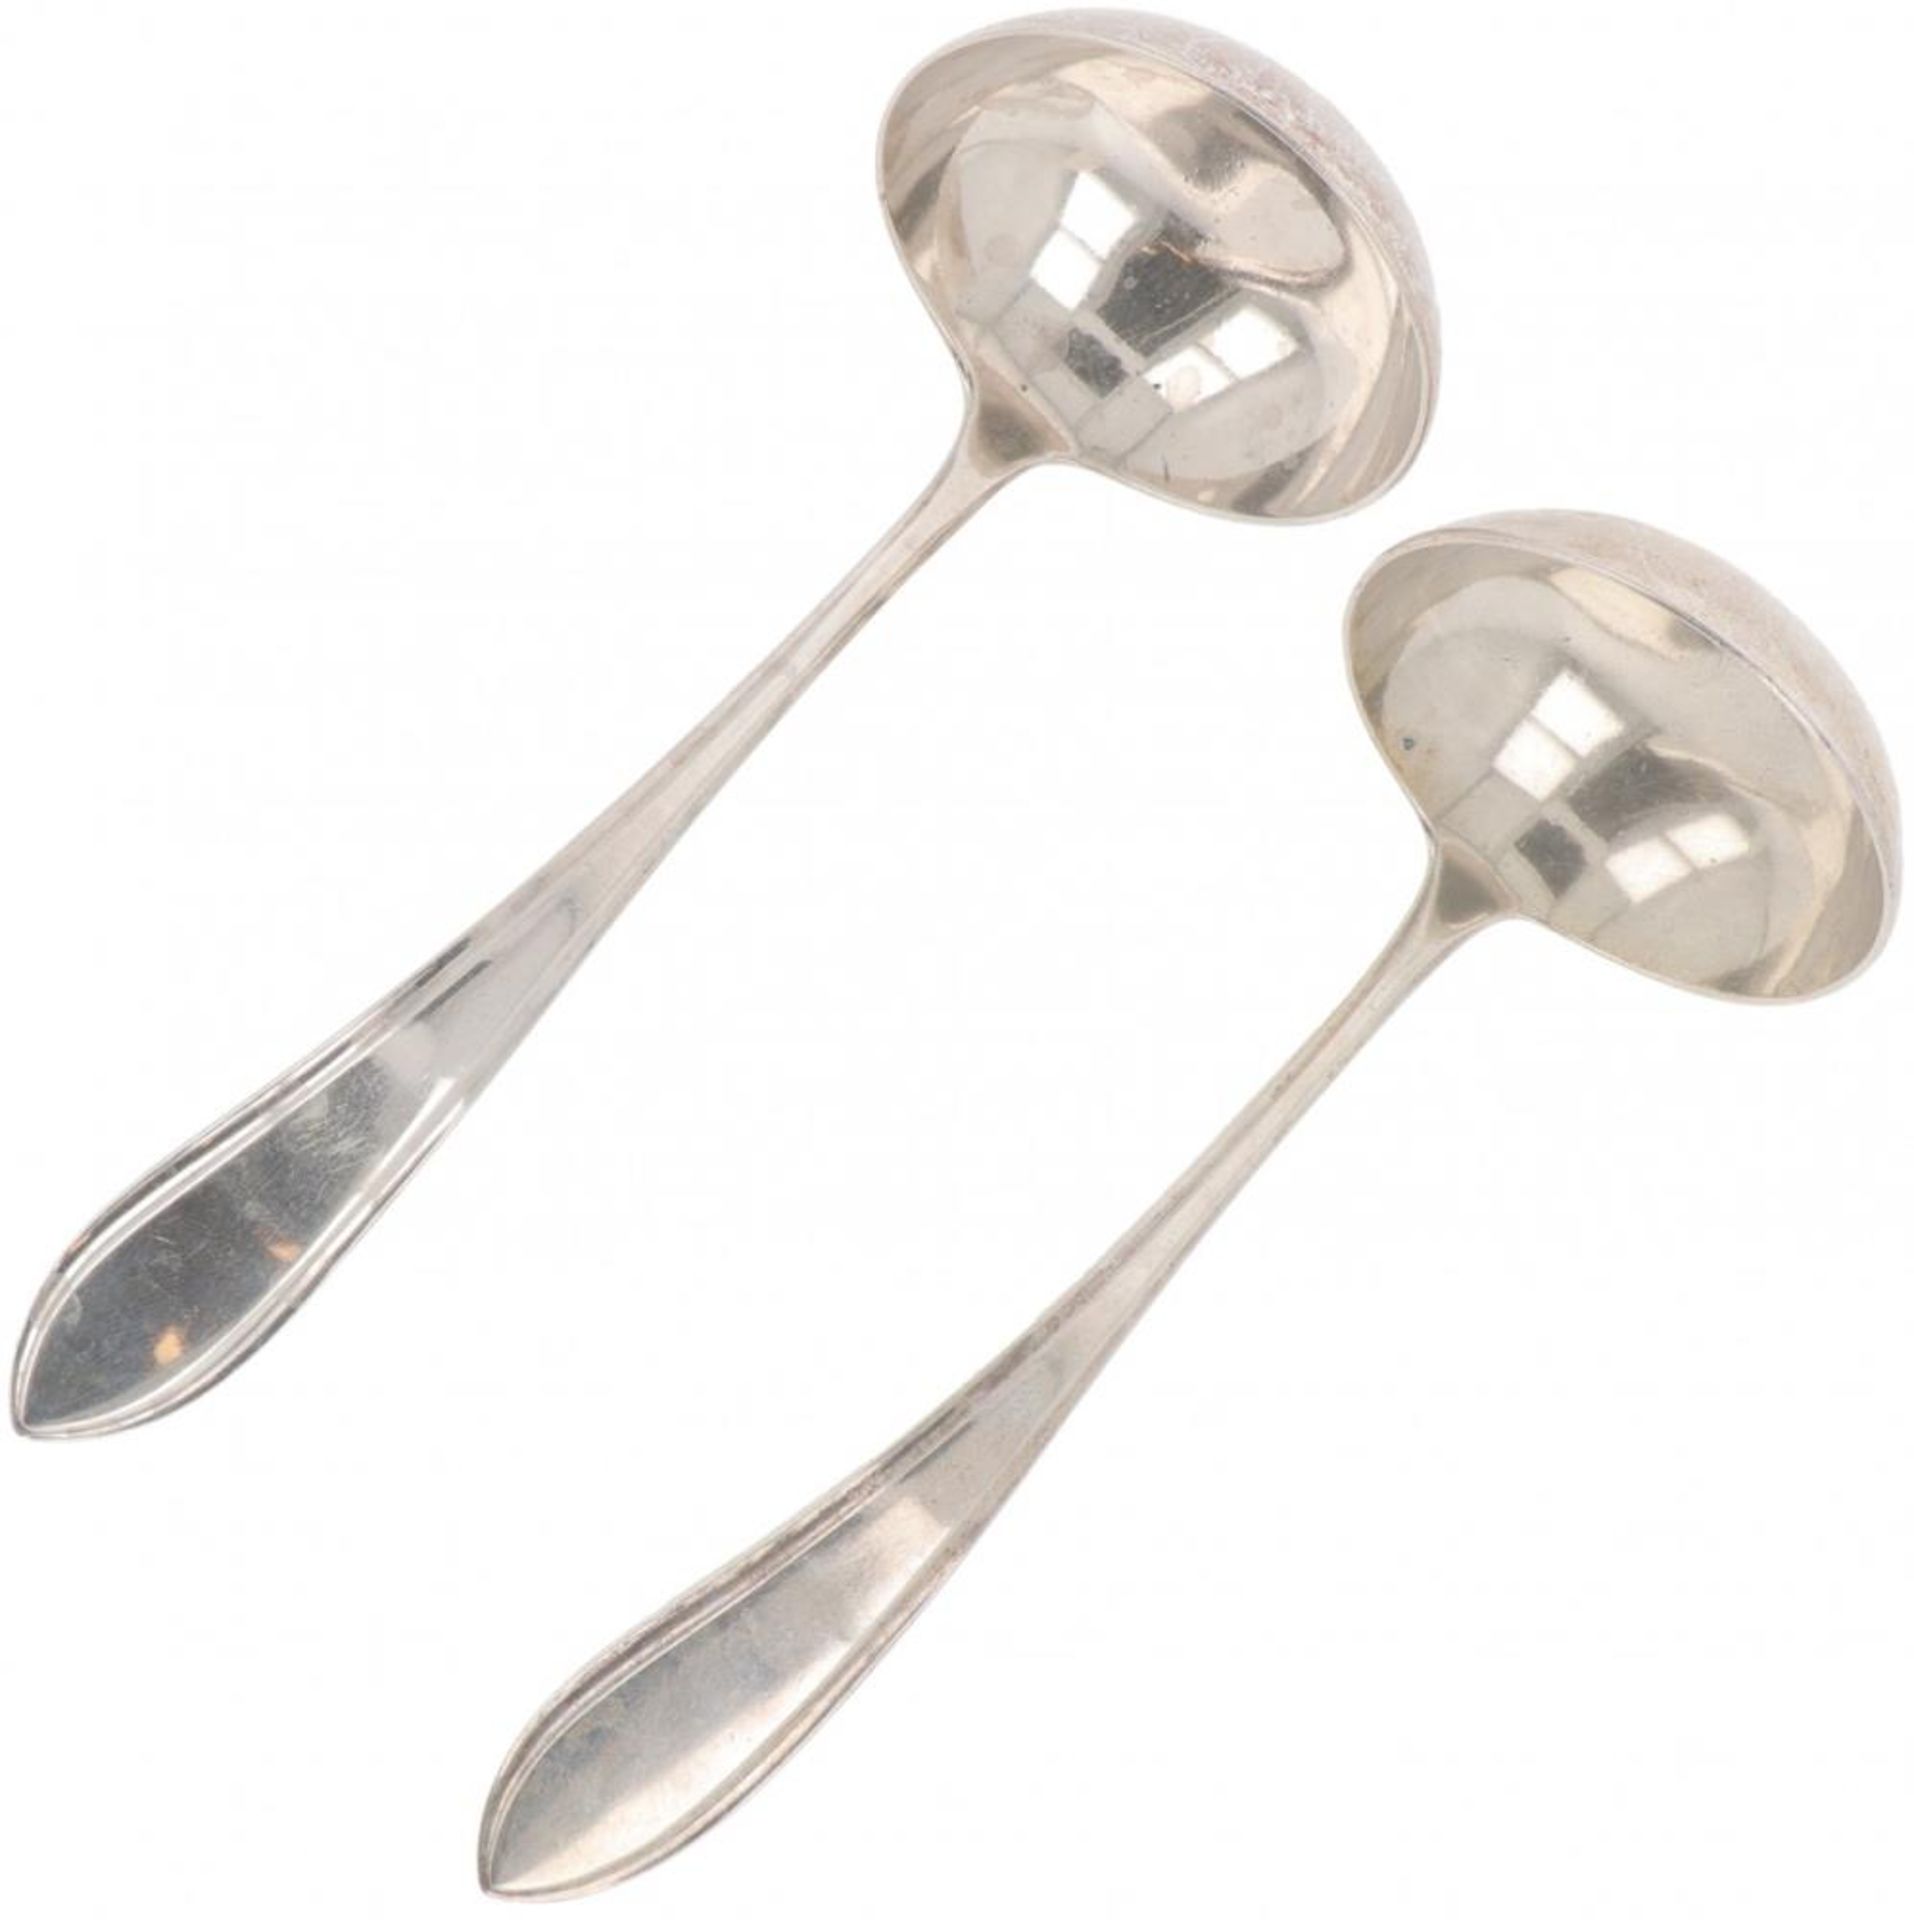 (2) piece set of sauce spoons "Dutch point fillet" silver.